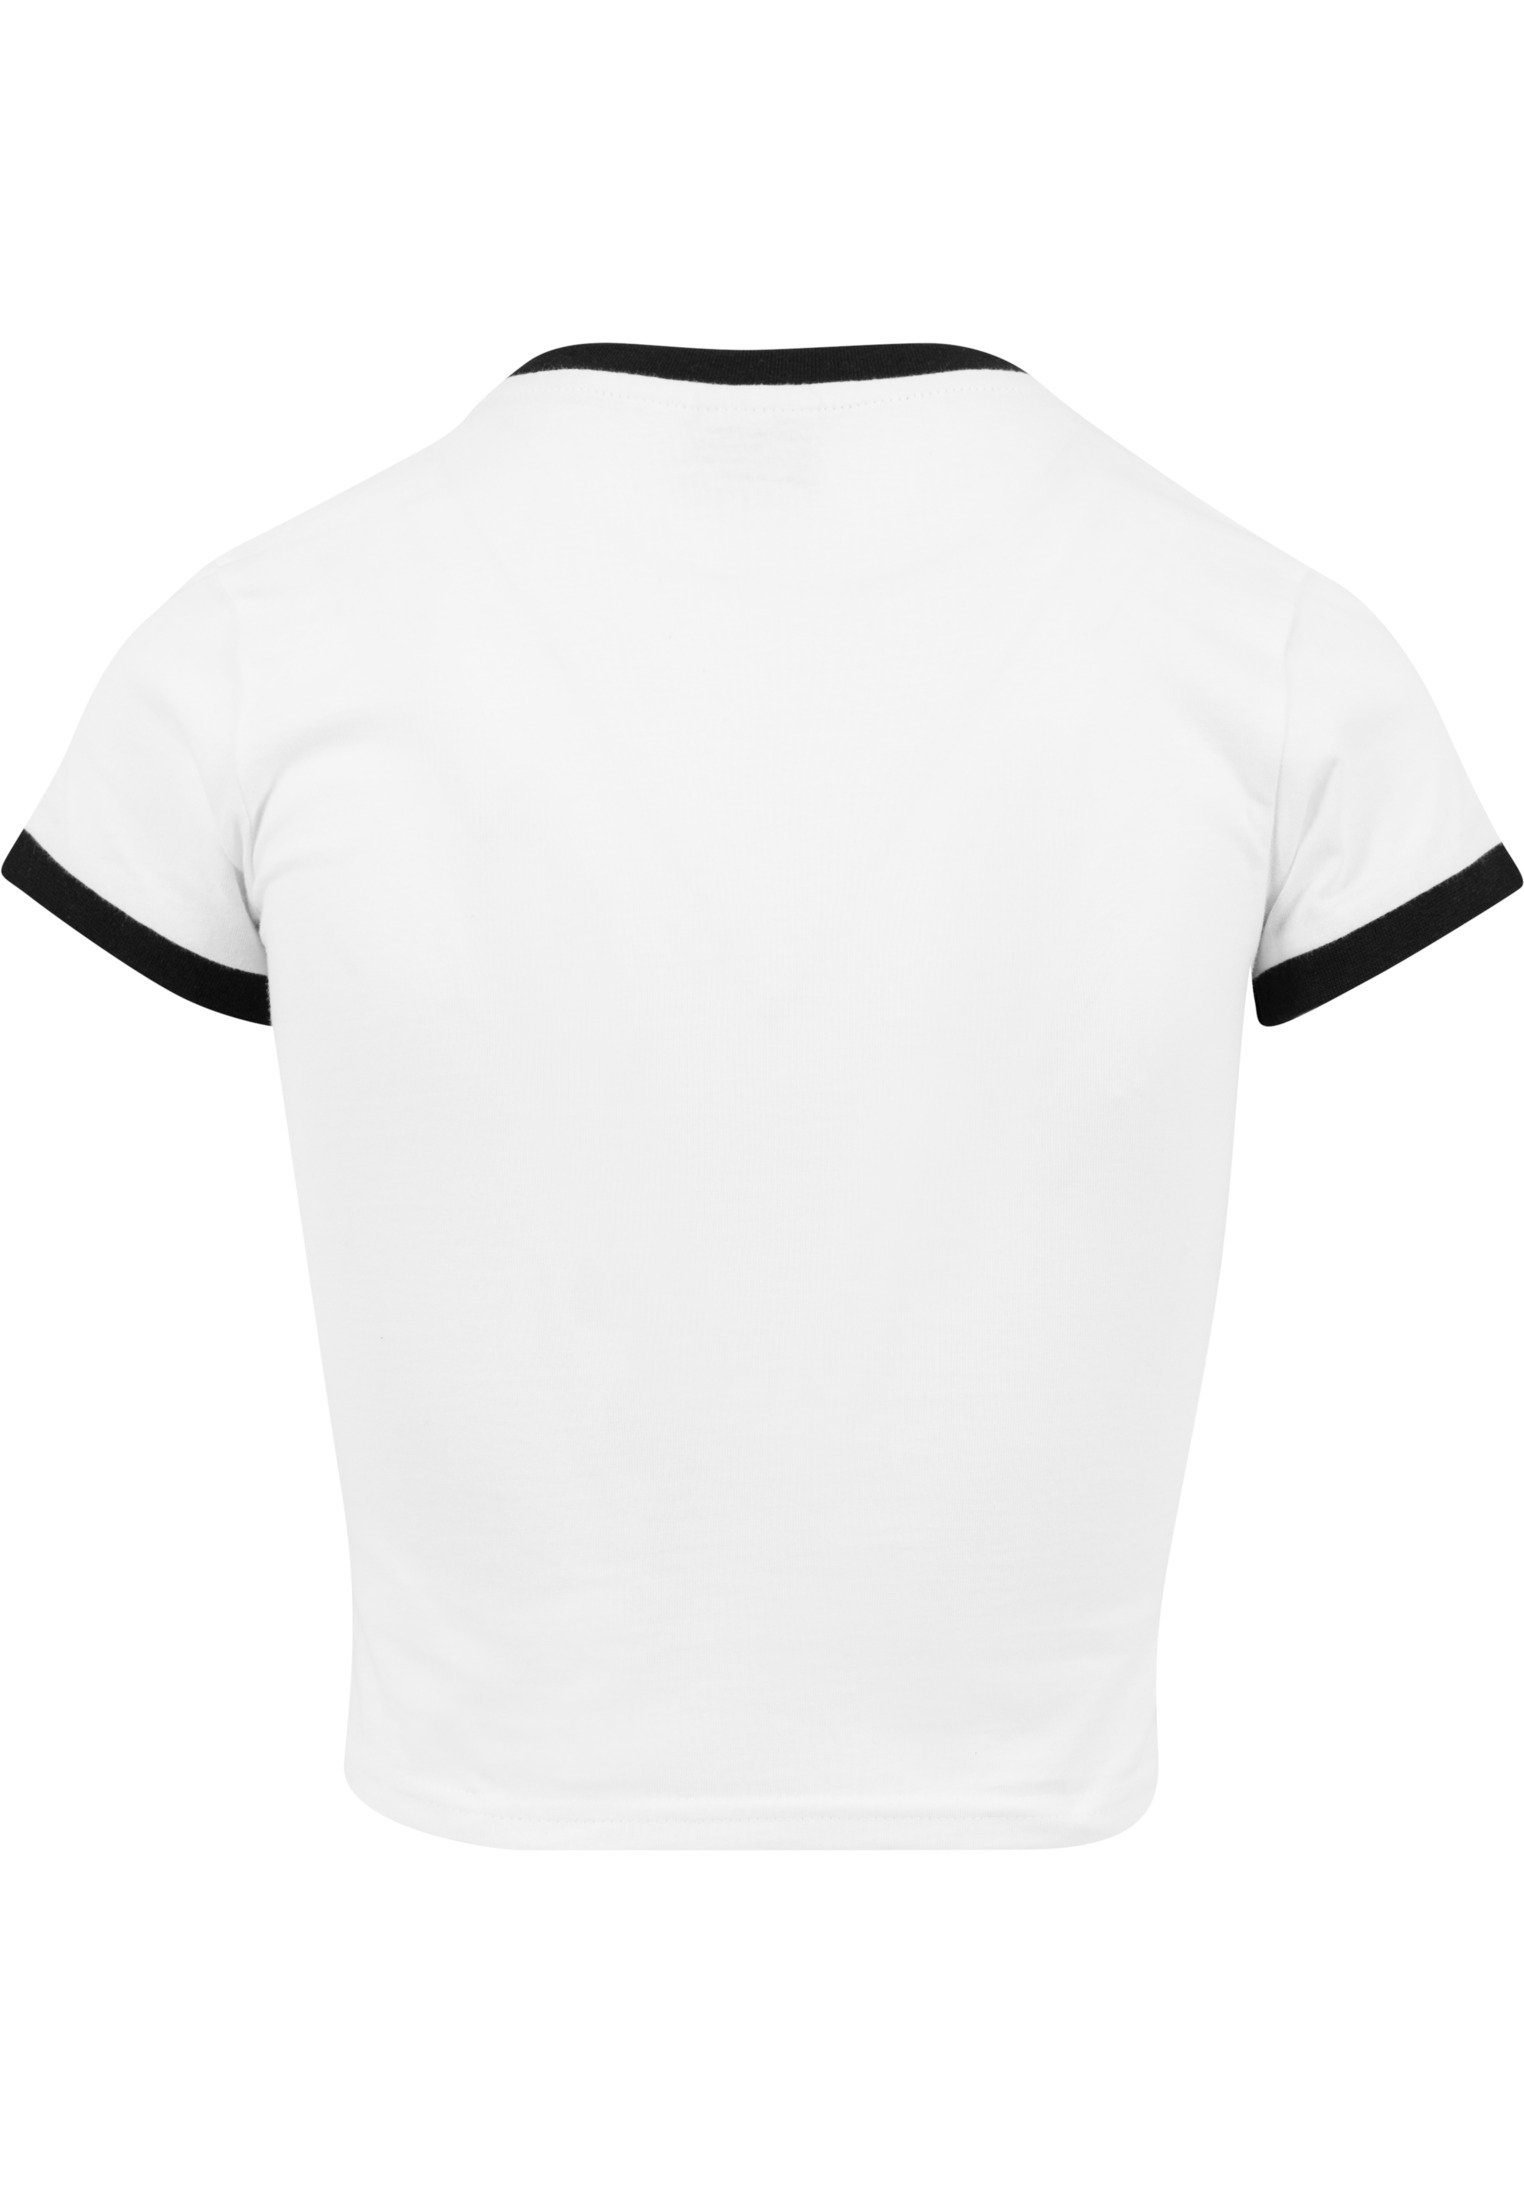 URBAN Cropped TB1502 wht/blk CLASSICS Ringer T-Shirt